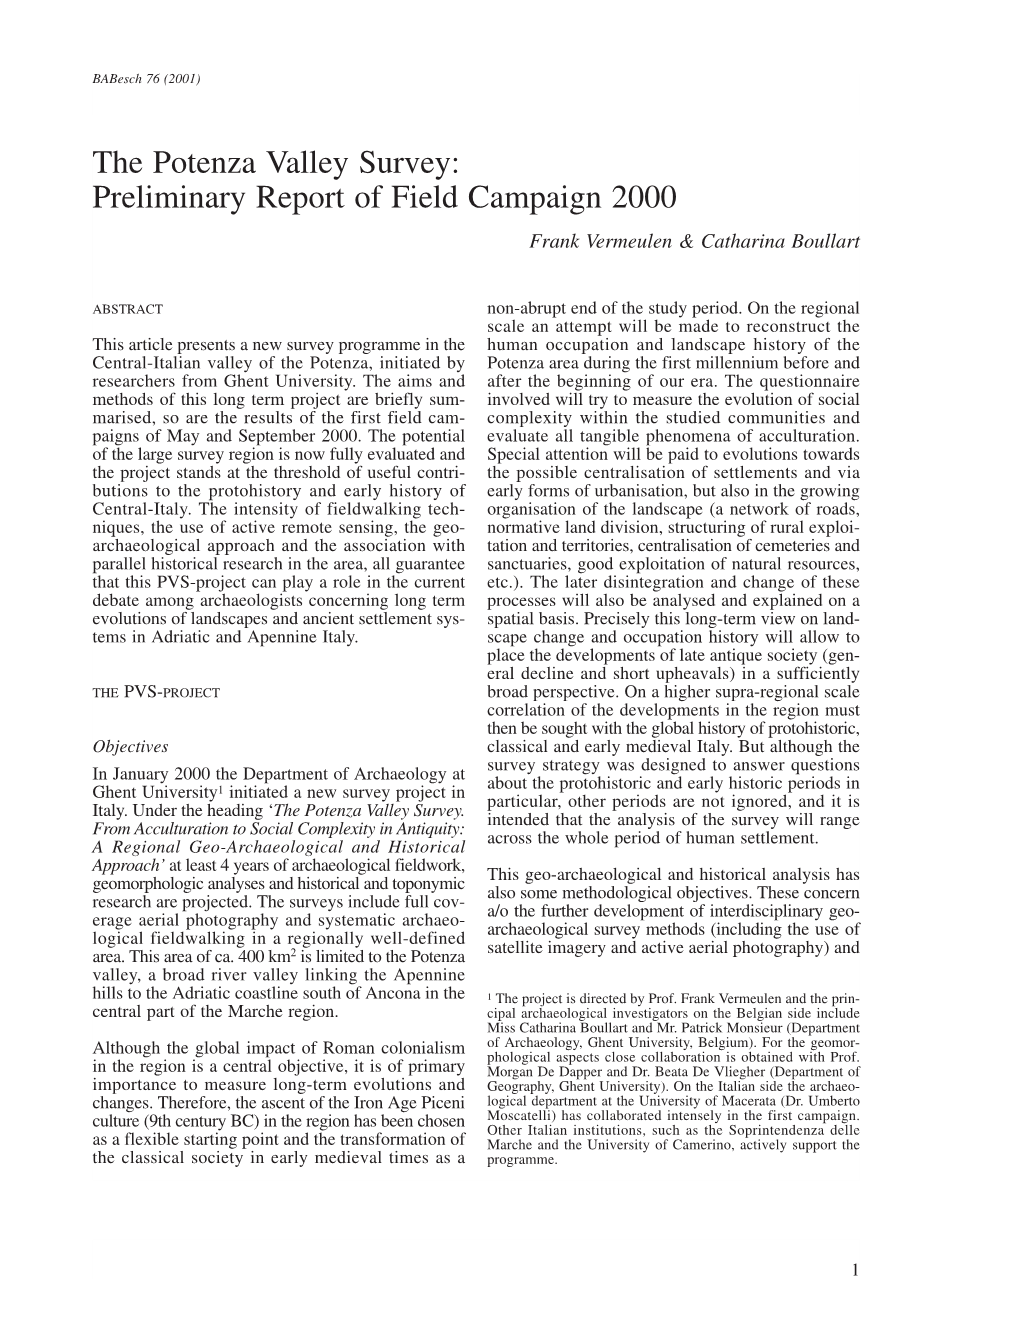 Preliminary Report of Field Campaign 2000 Frank Vermeulen & Catharina Boullart